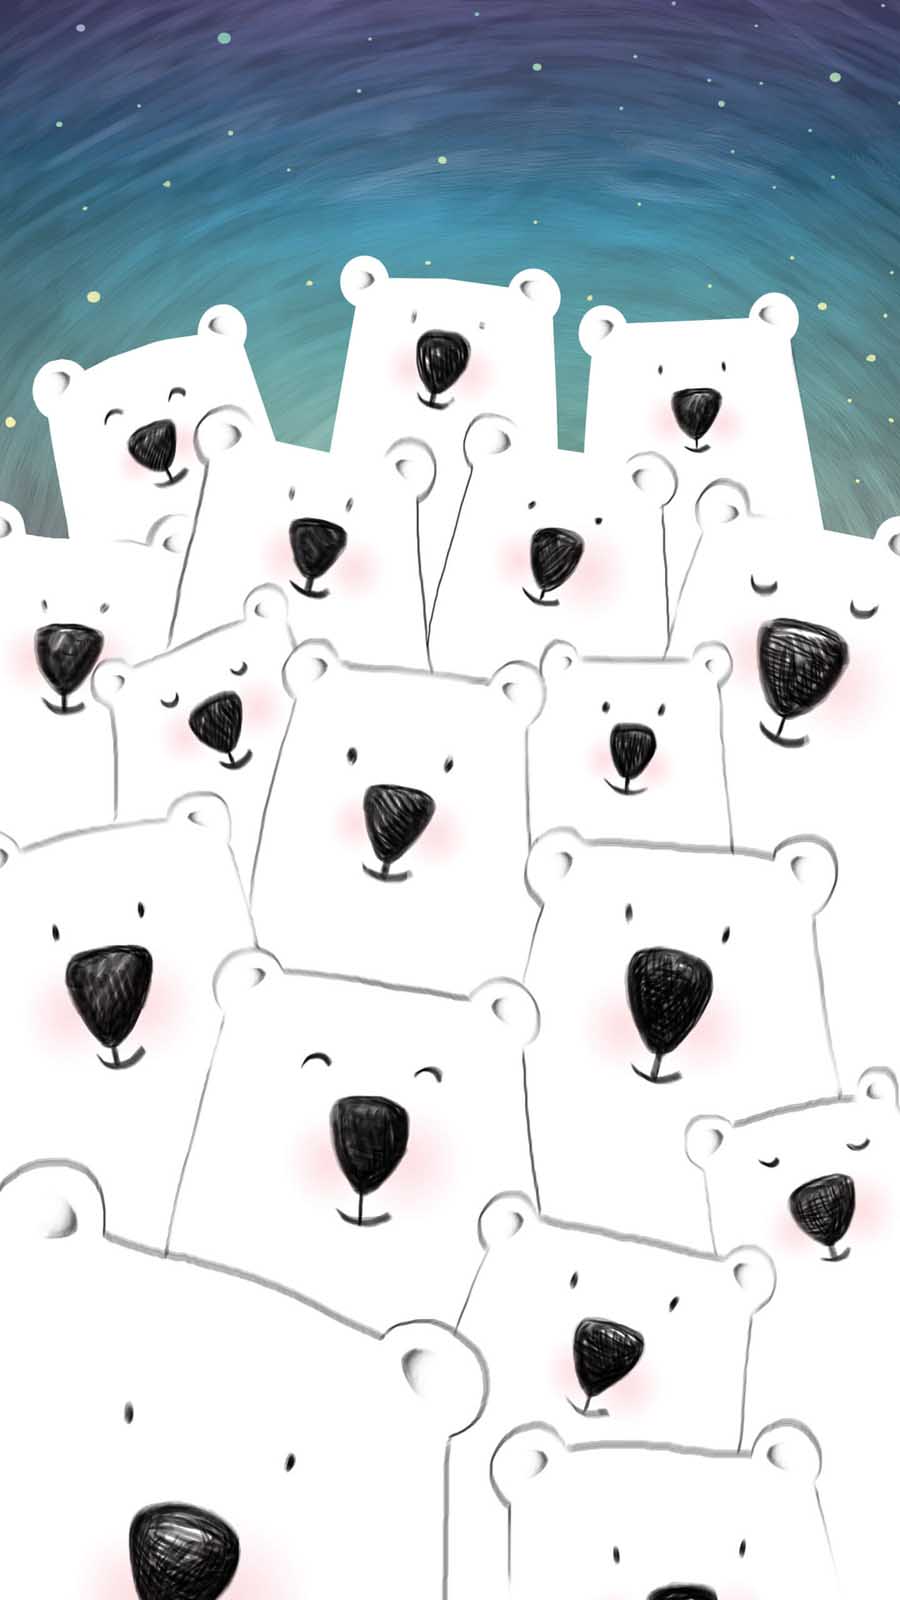 Cute Bears IPhone Wallpaper HD - IPhone Wallpapers : iPhone Wallpapers